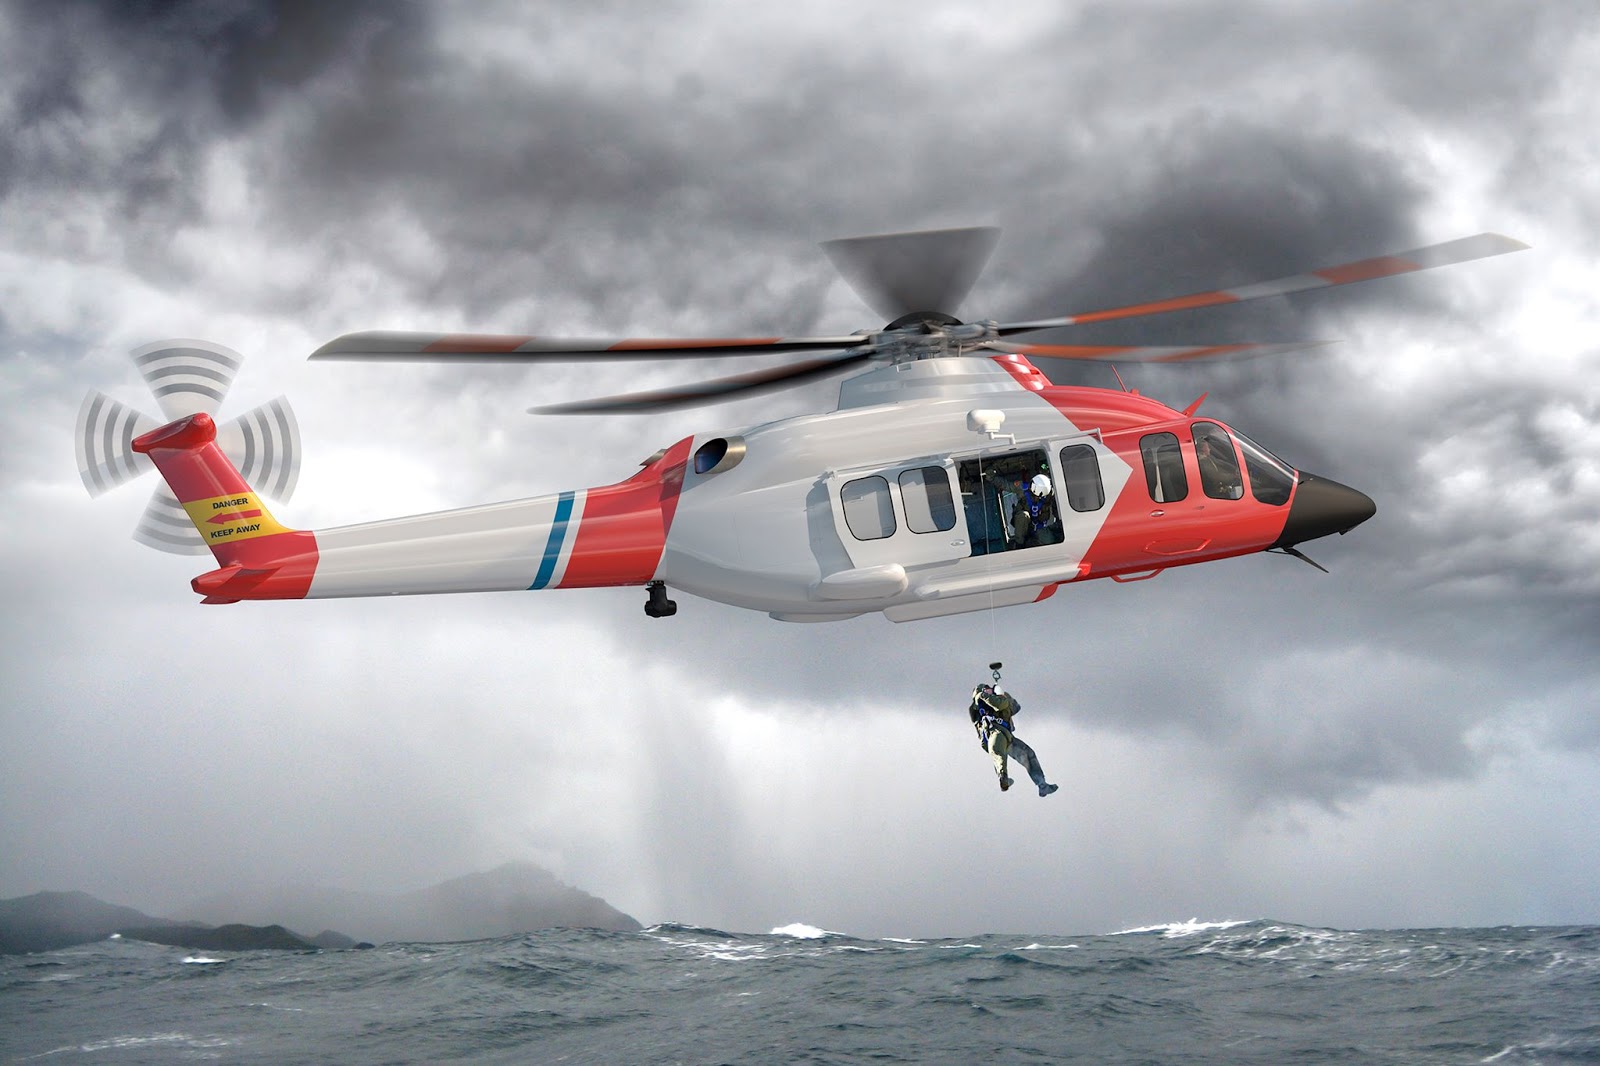 
Abu Dhabi Aviation заказывает 10 вертолетов Bell 525 Relentless